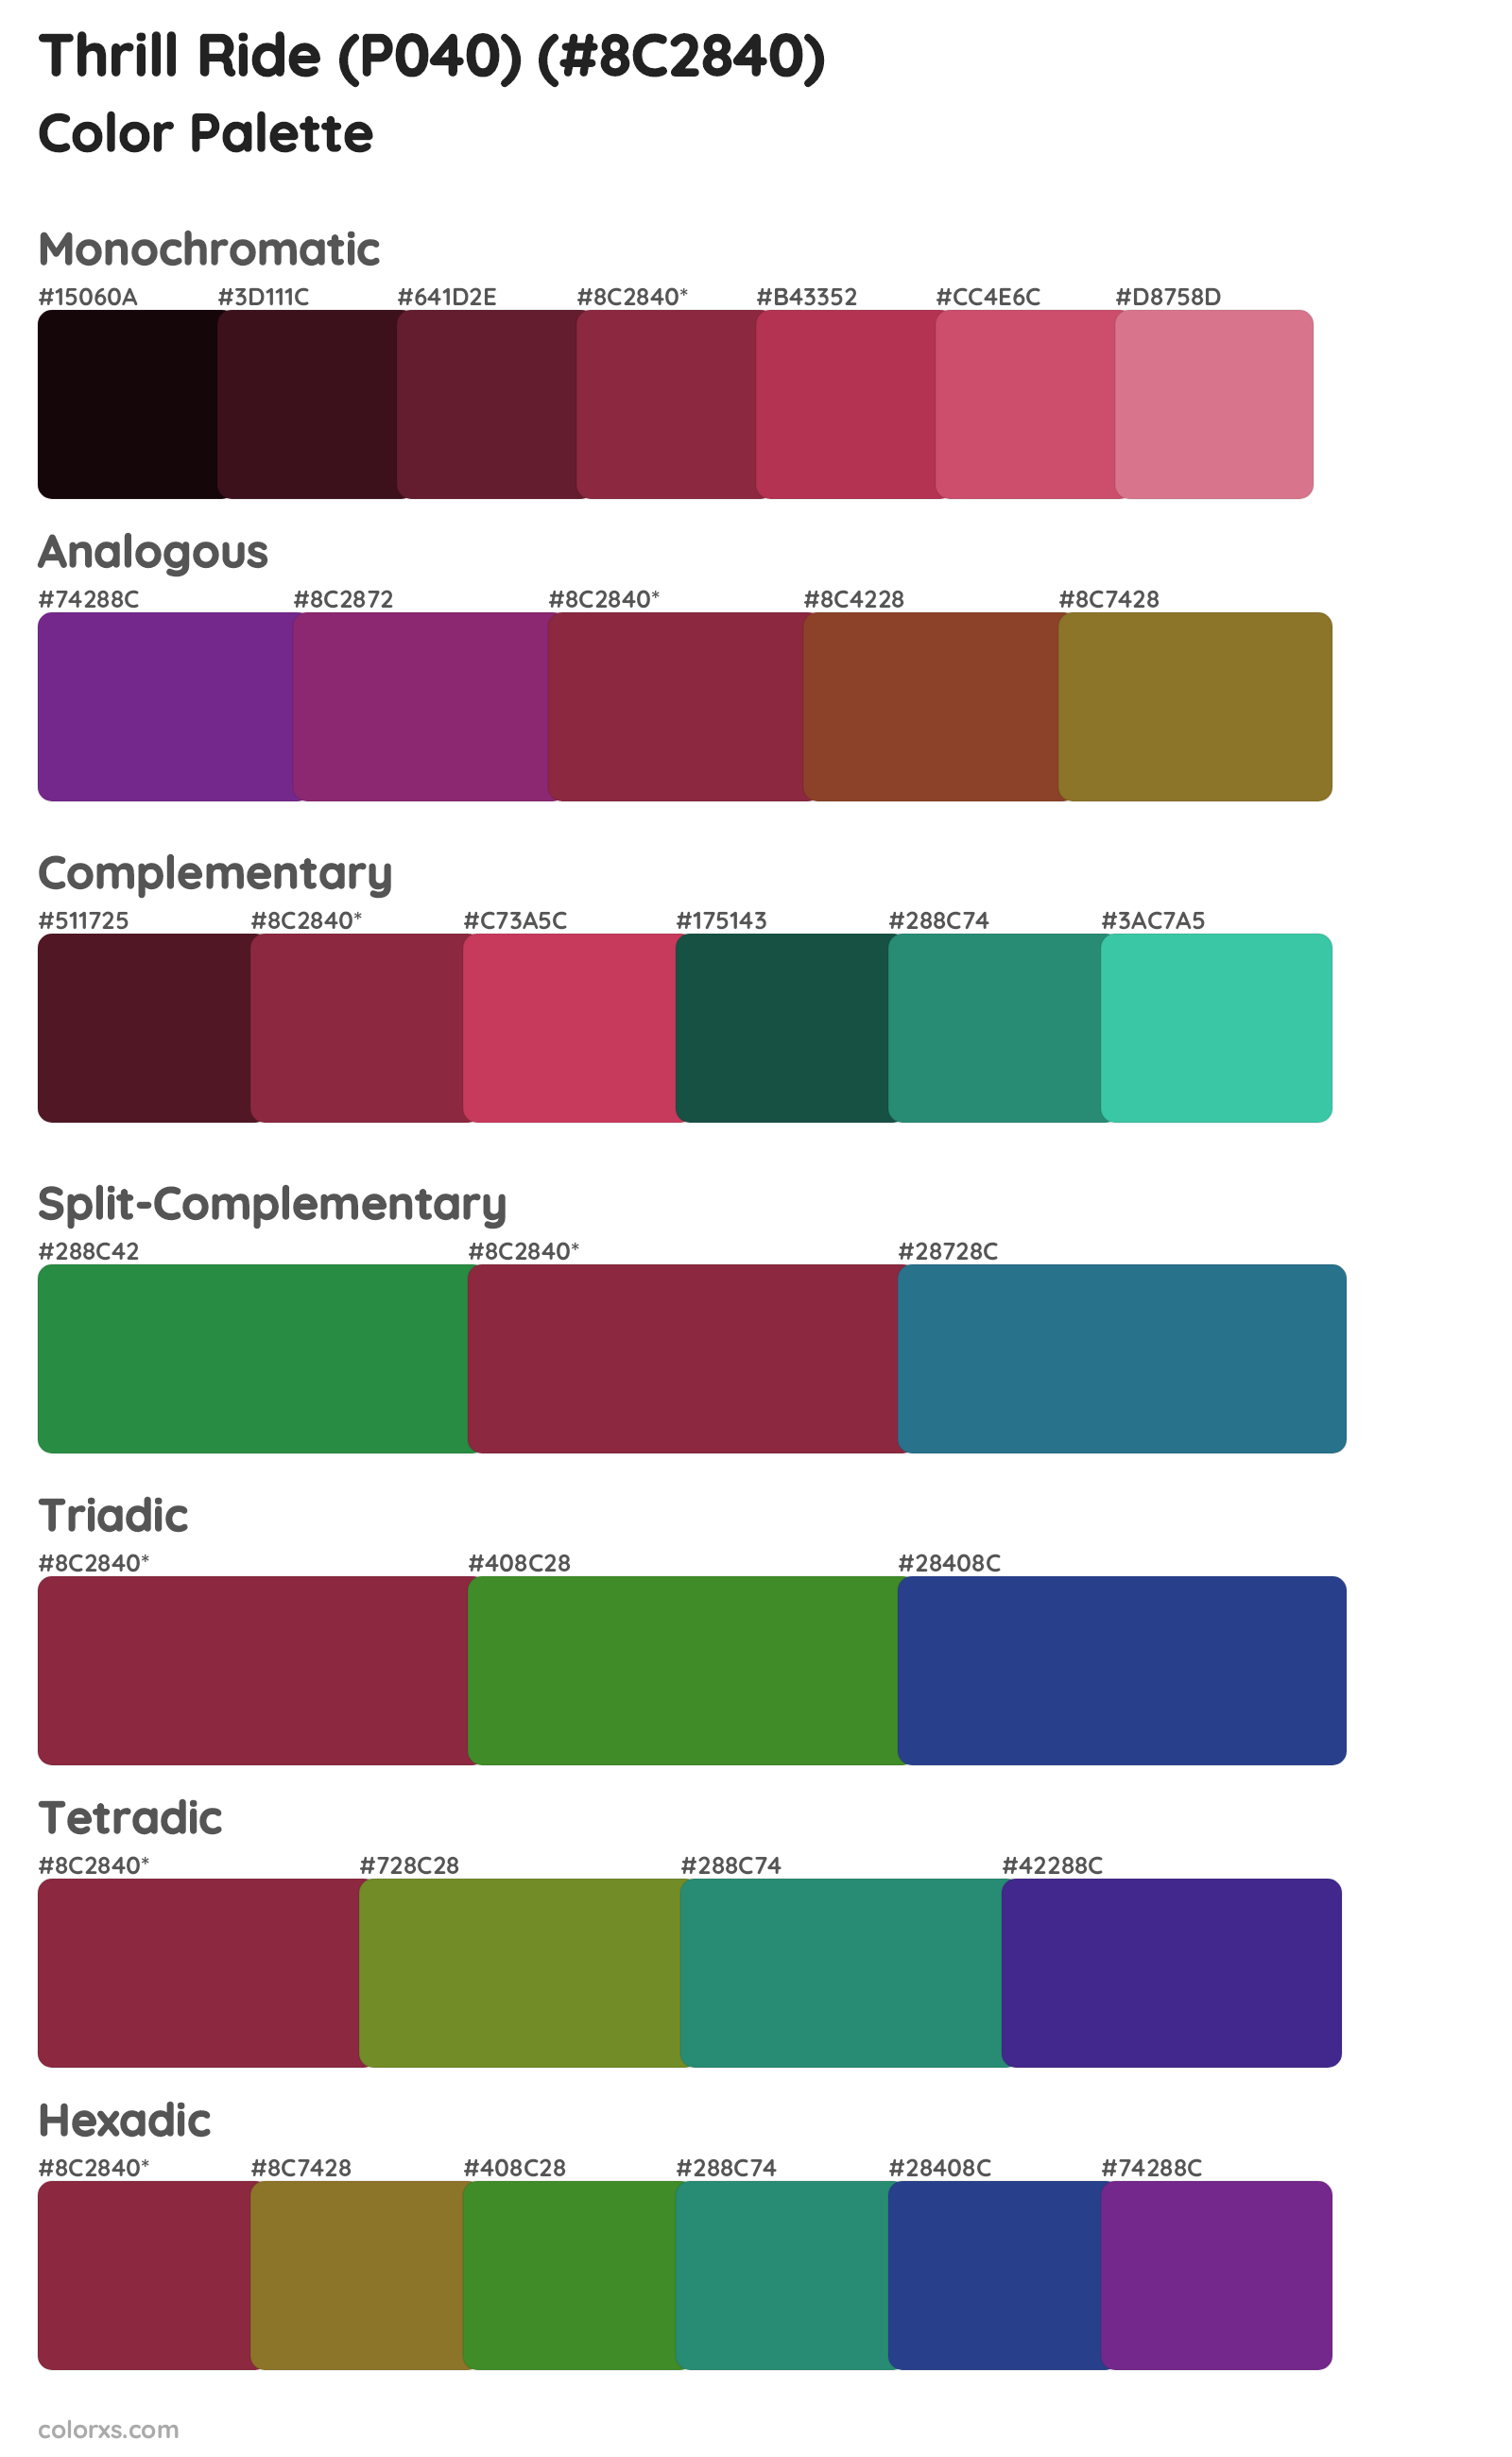 Thrill Ride (P040) Color Scheme Palettes